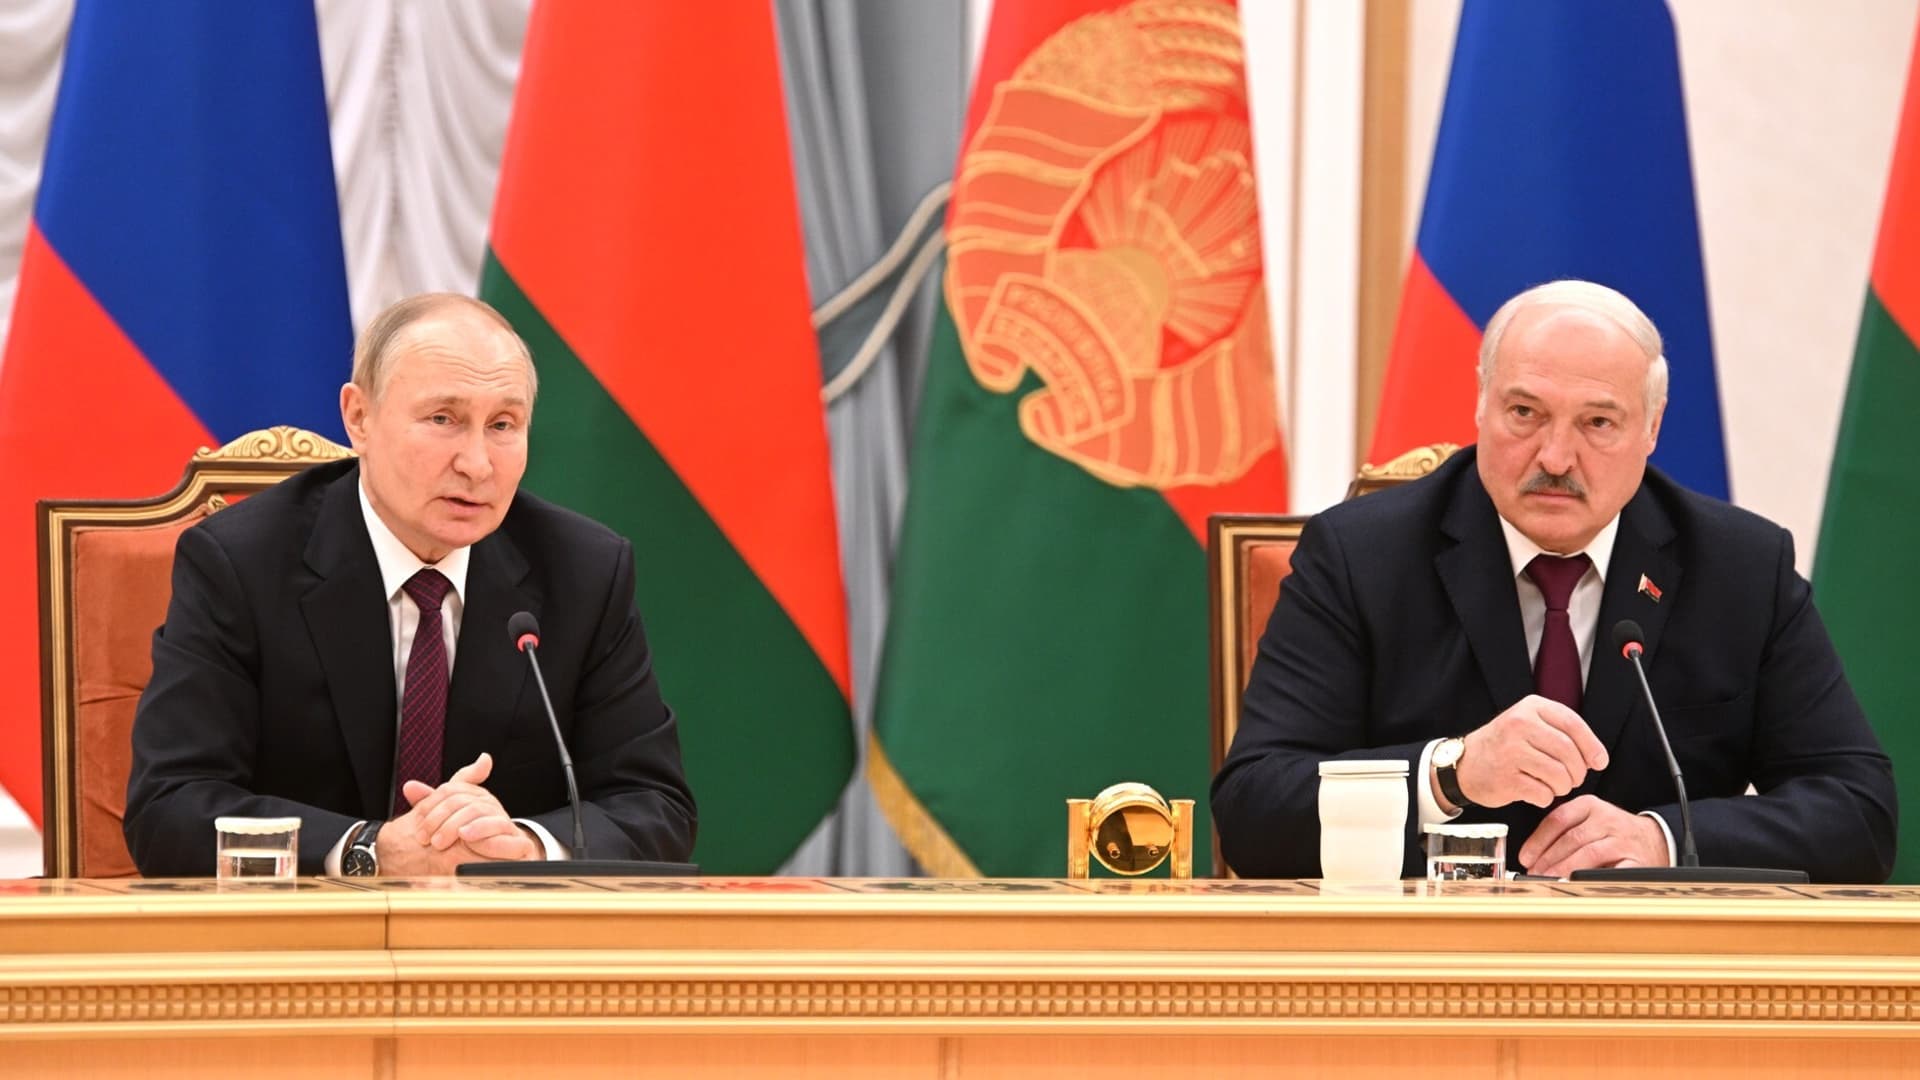 Russian President Vladimir Putin and Belarusian President Alexander Lukashenko meet at the Palace of Independence in Minsk, Belarus on December 19, 2022.